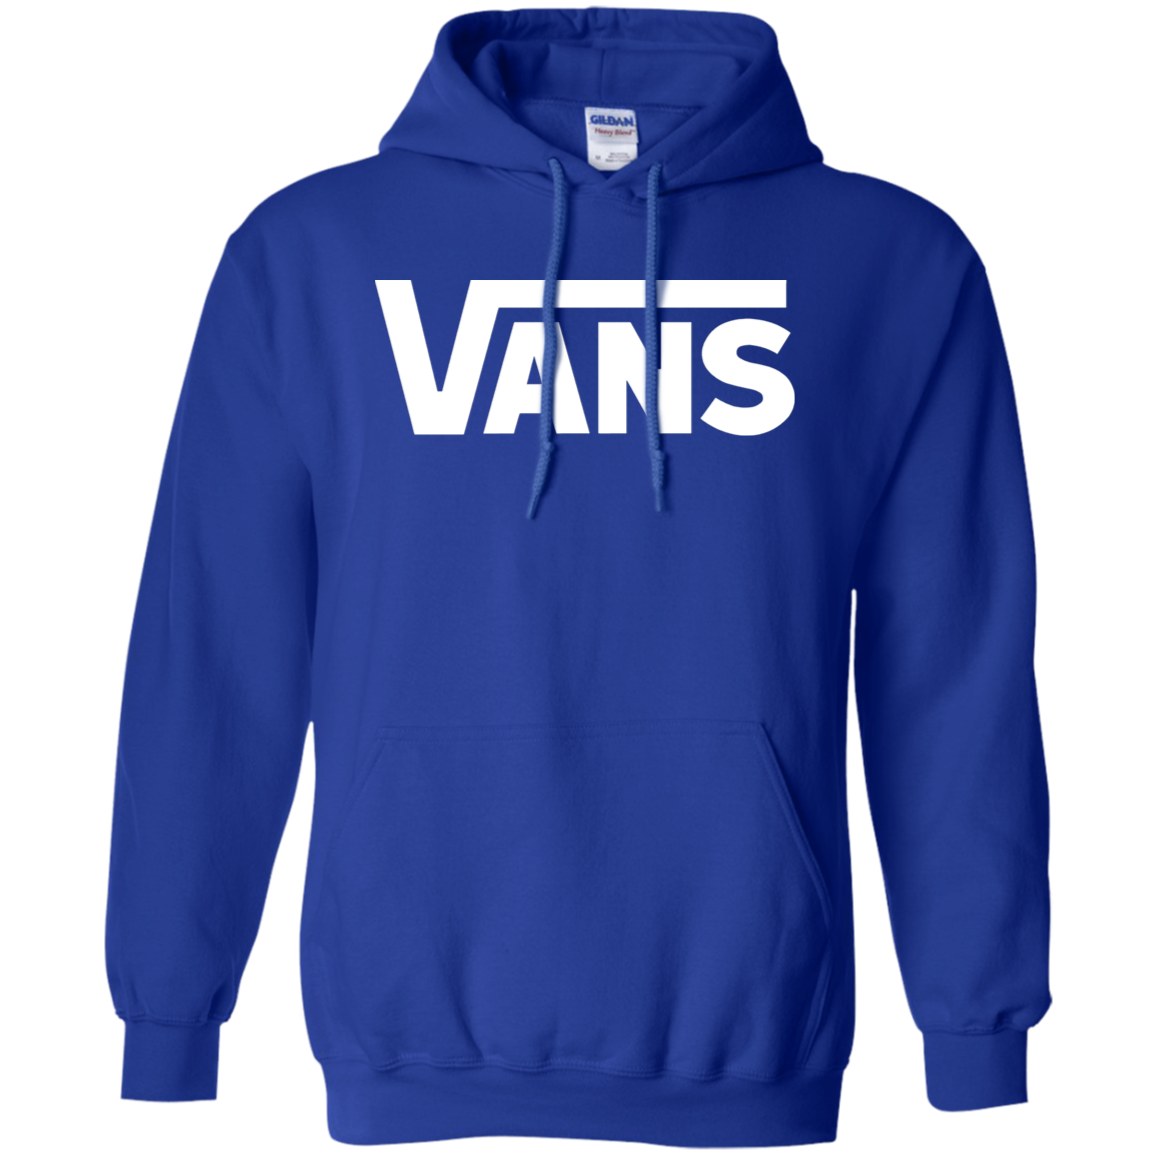 blue vans sweater